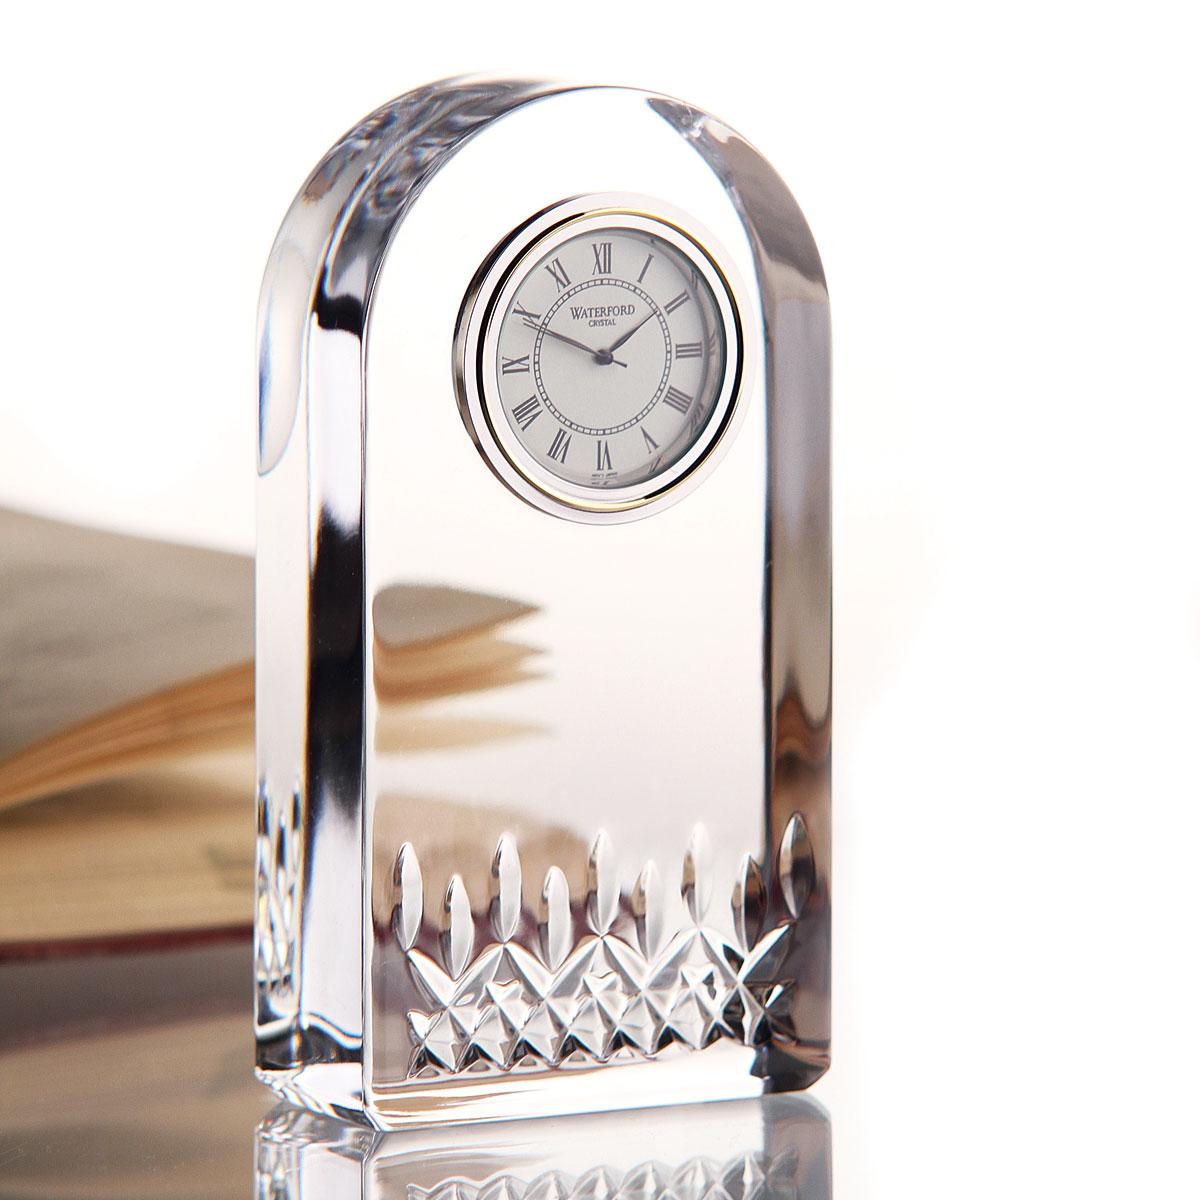 Waterford Lismore Essence Desk Clock